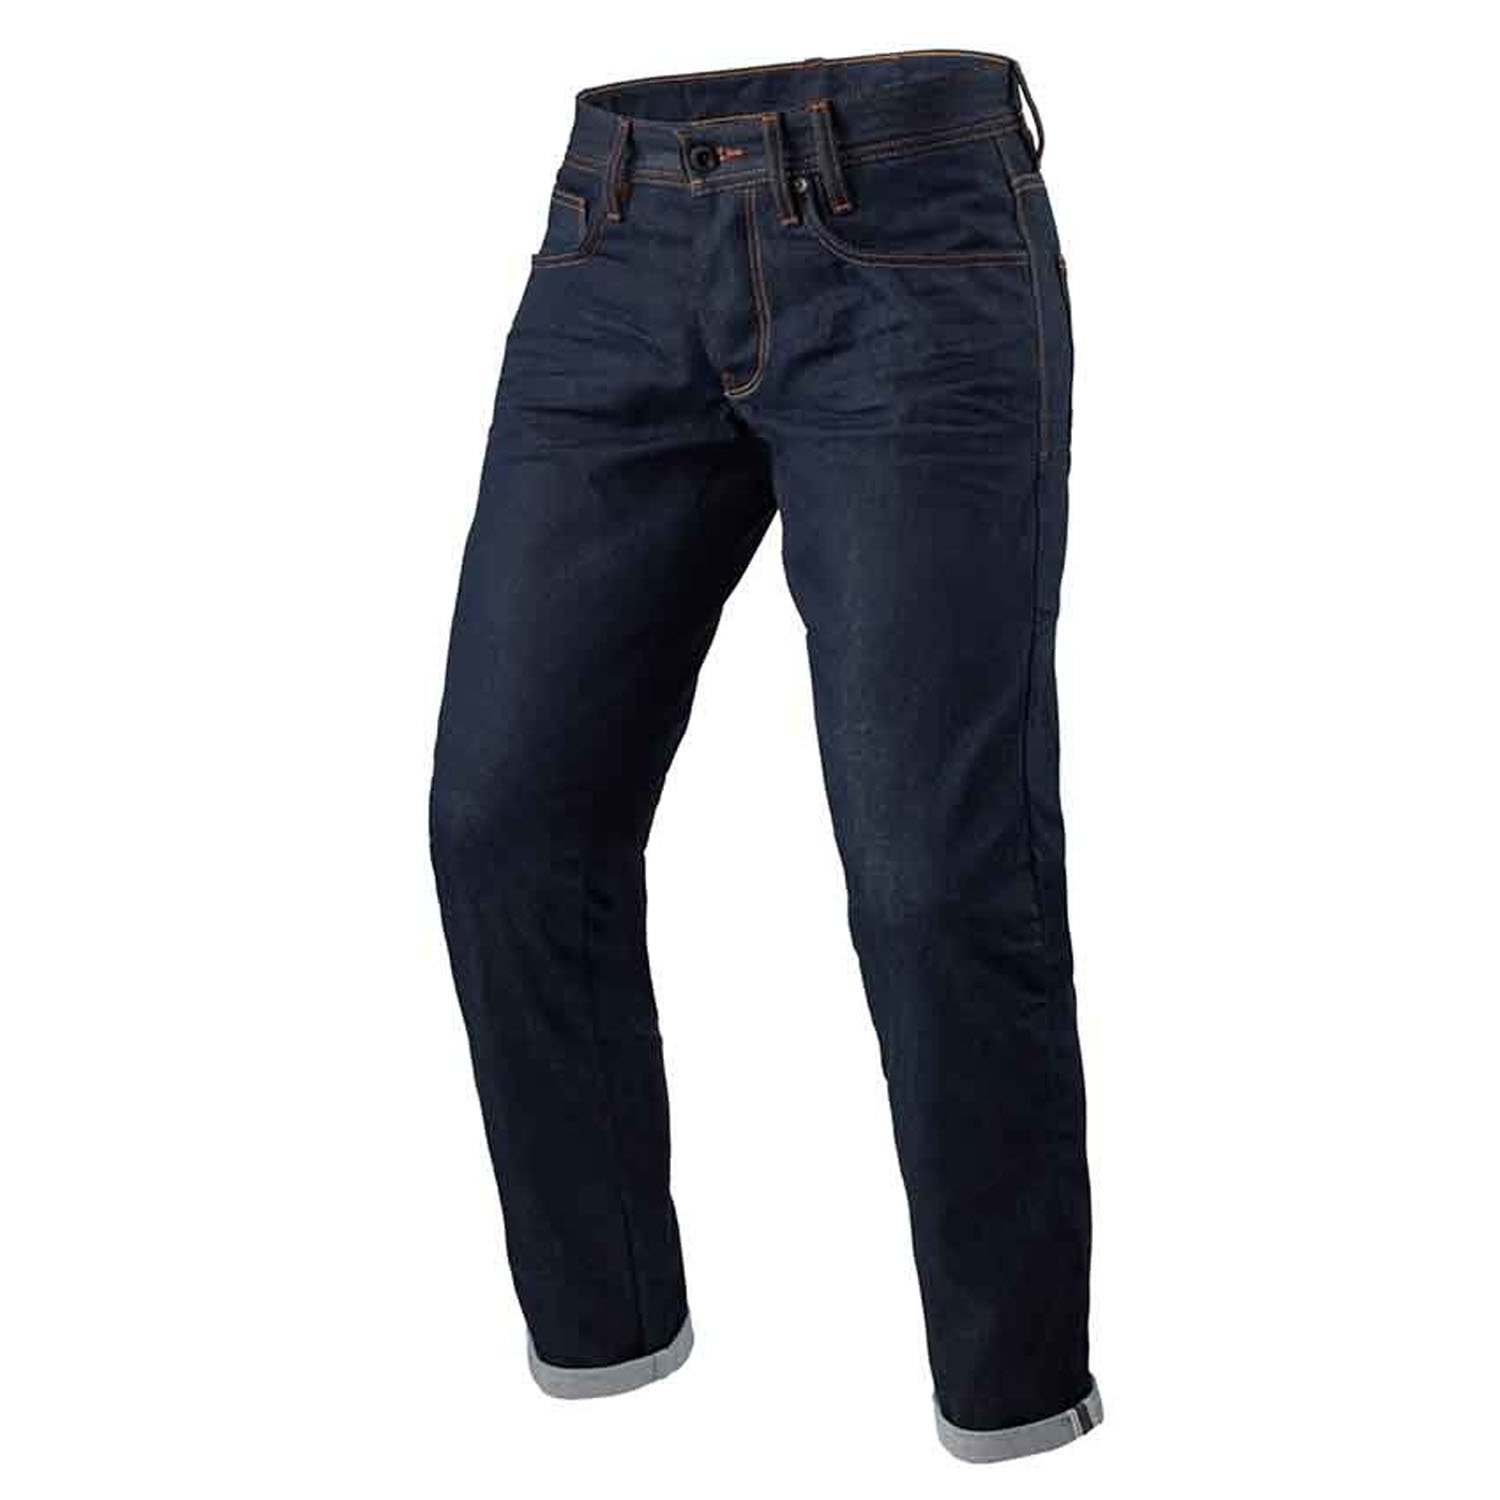 Image of REV'IT! Jeans Lewis Selvedge TF Dark Blue L36 Motorcycle Pants Größe L36/W38